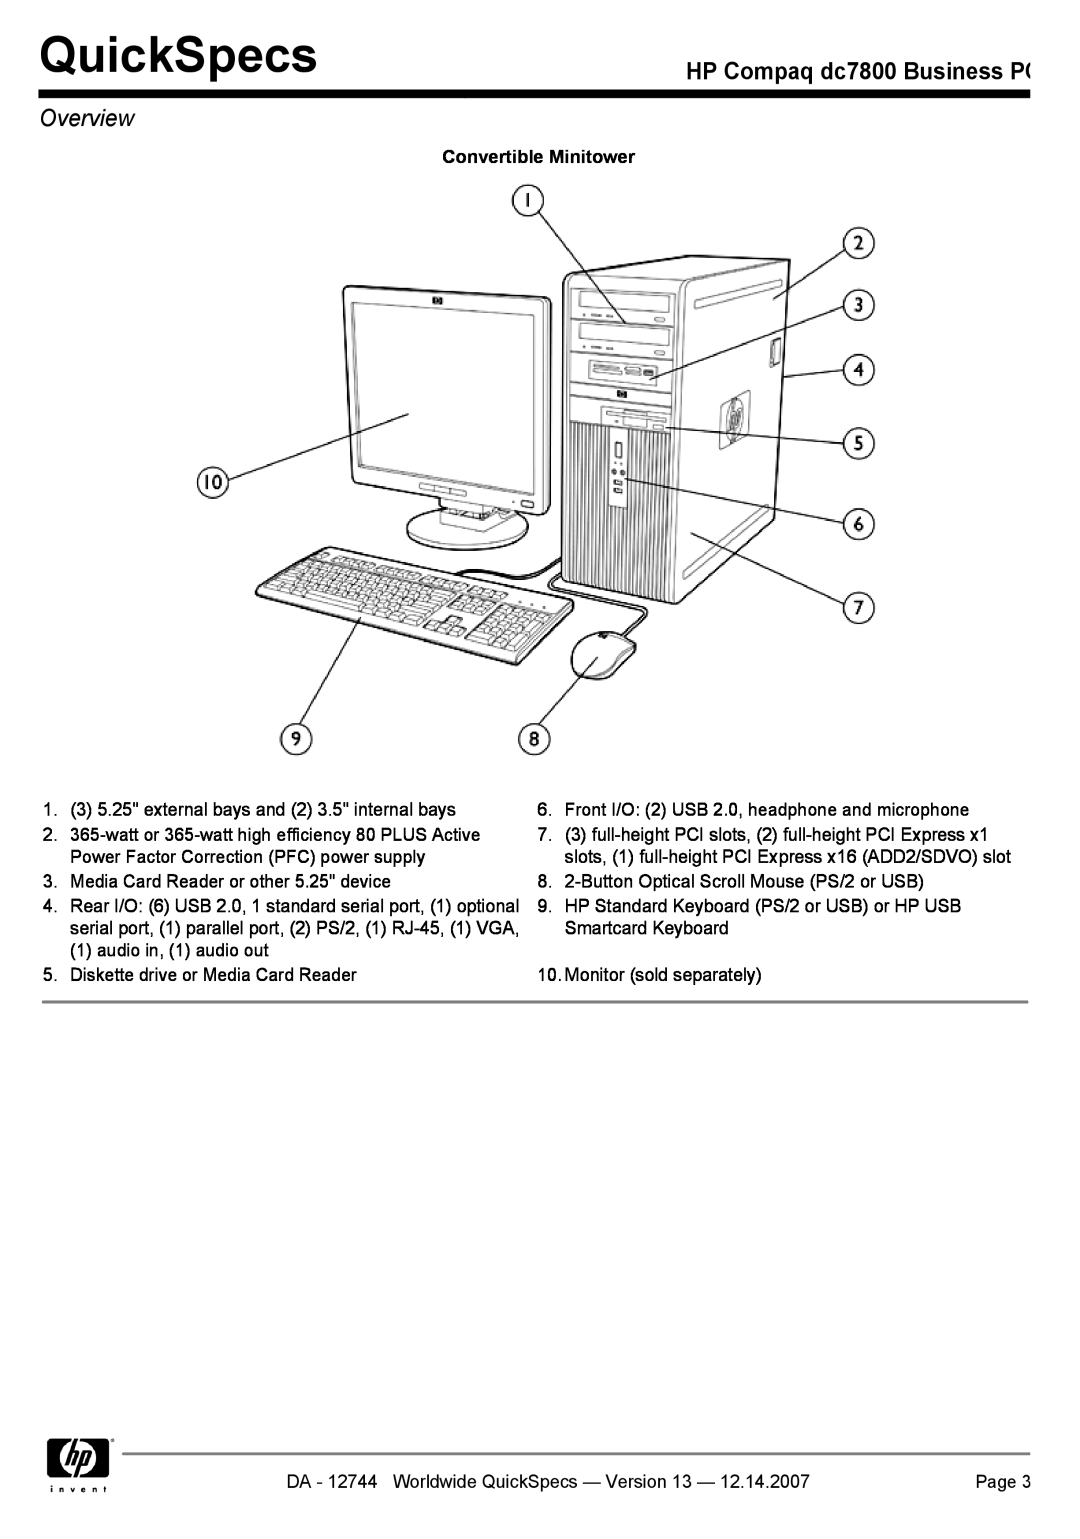 Compaq manual QuickSpecs, HP Compaq dc7800 Business PC, Overview, Convertible Minitower 